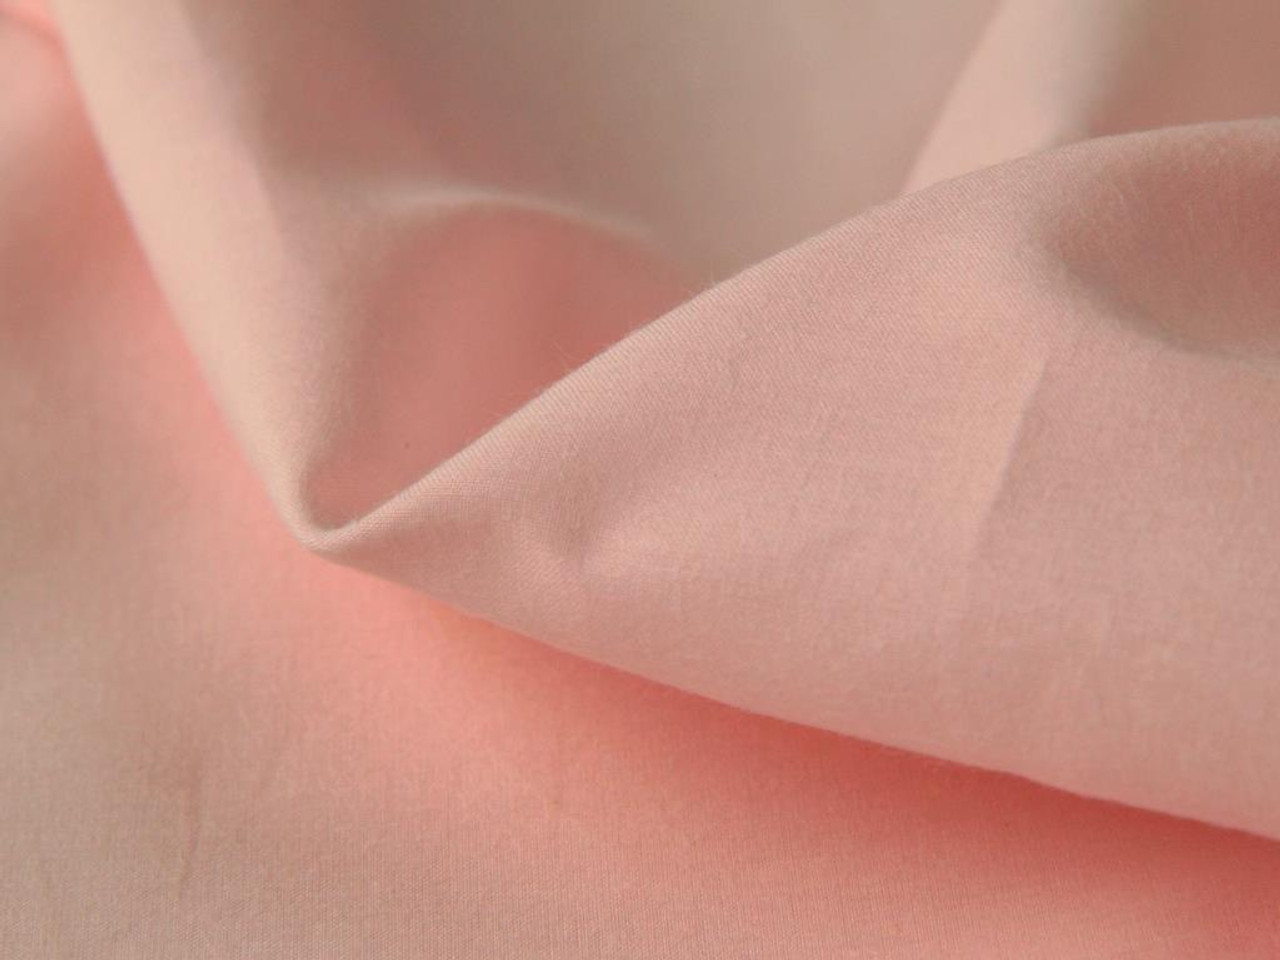 Dressmaking Fabric, Cotton Lawn - Light Pink